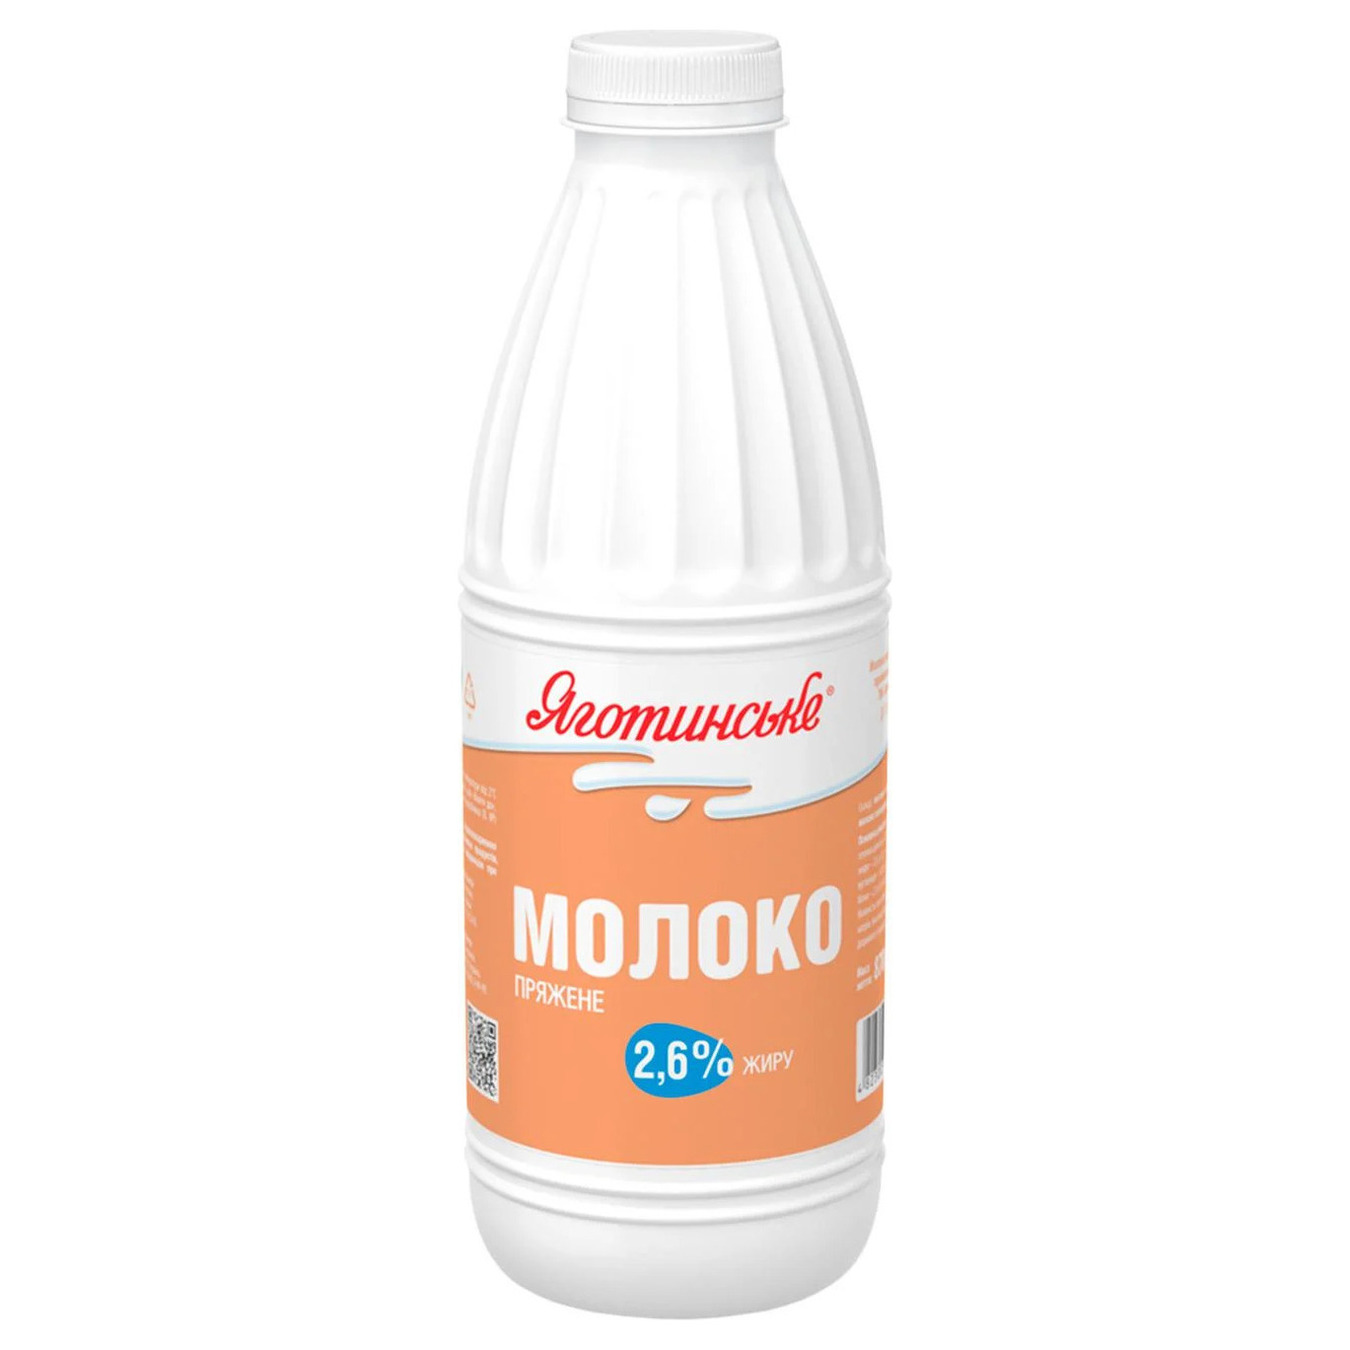 Yagotynskoe condensed milk 2.6% 870g